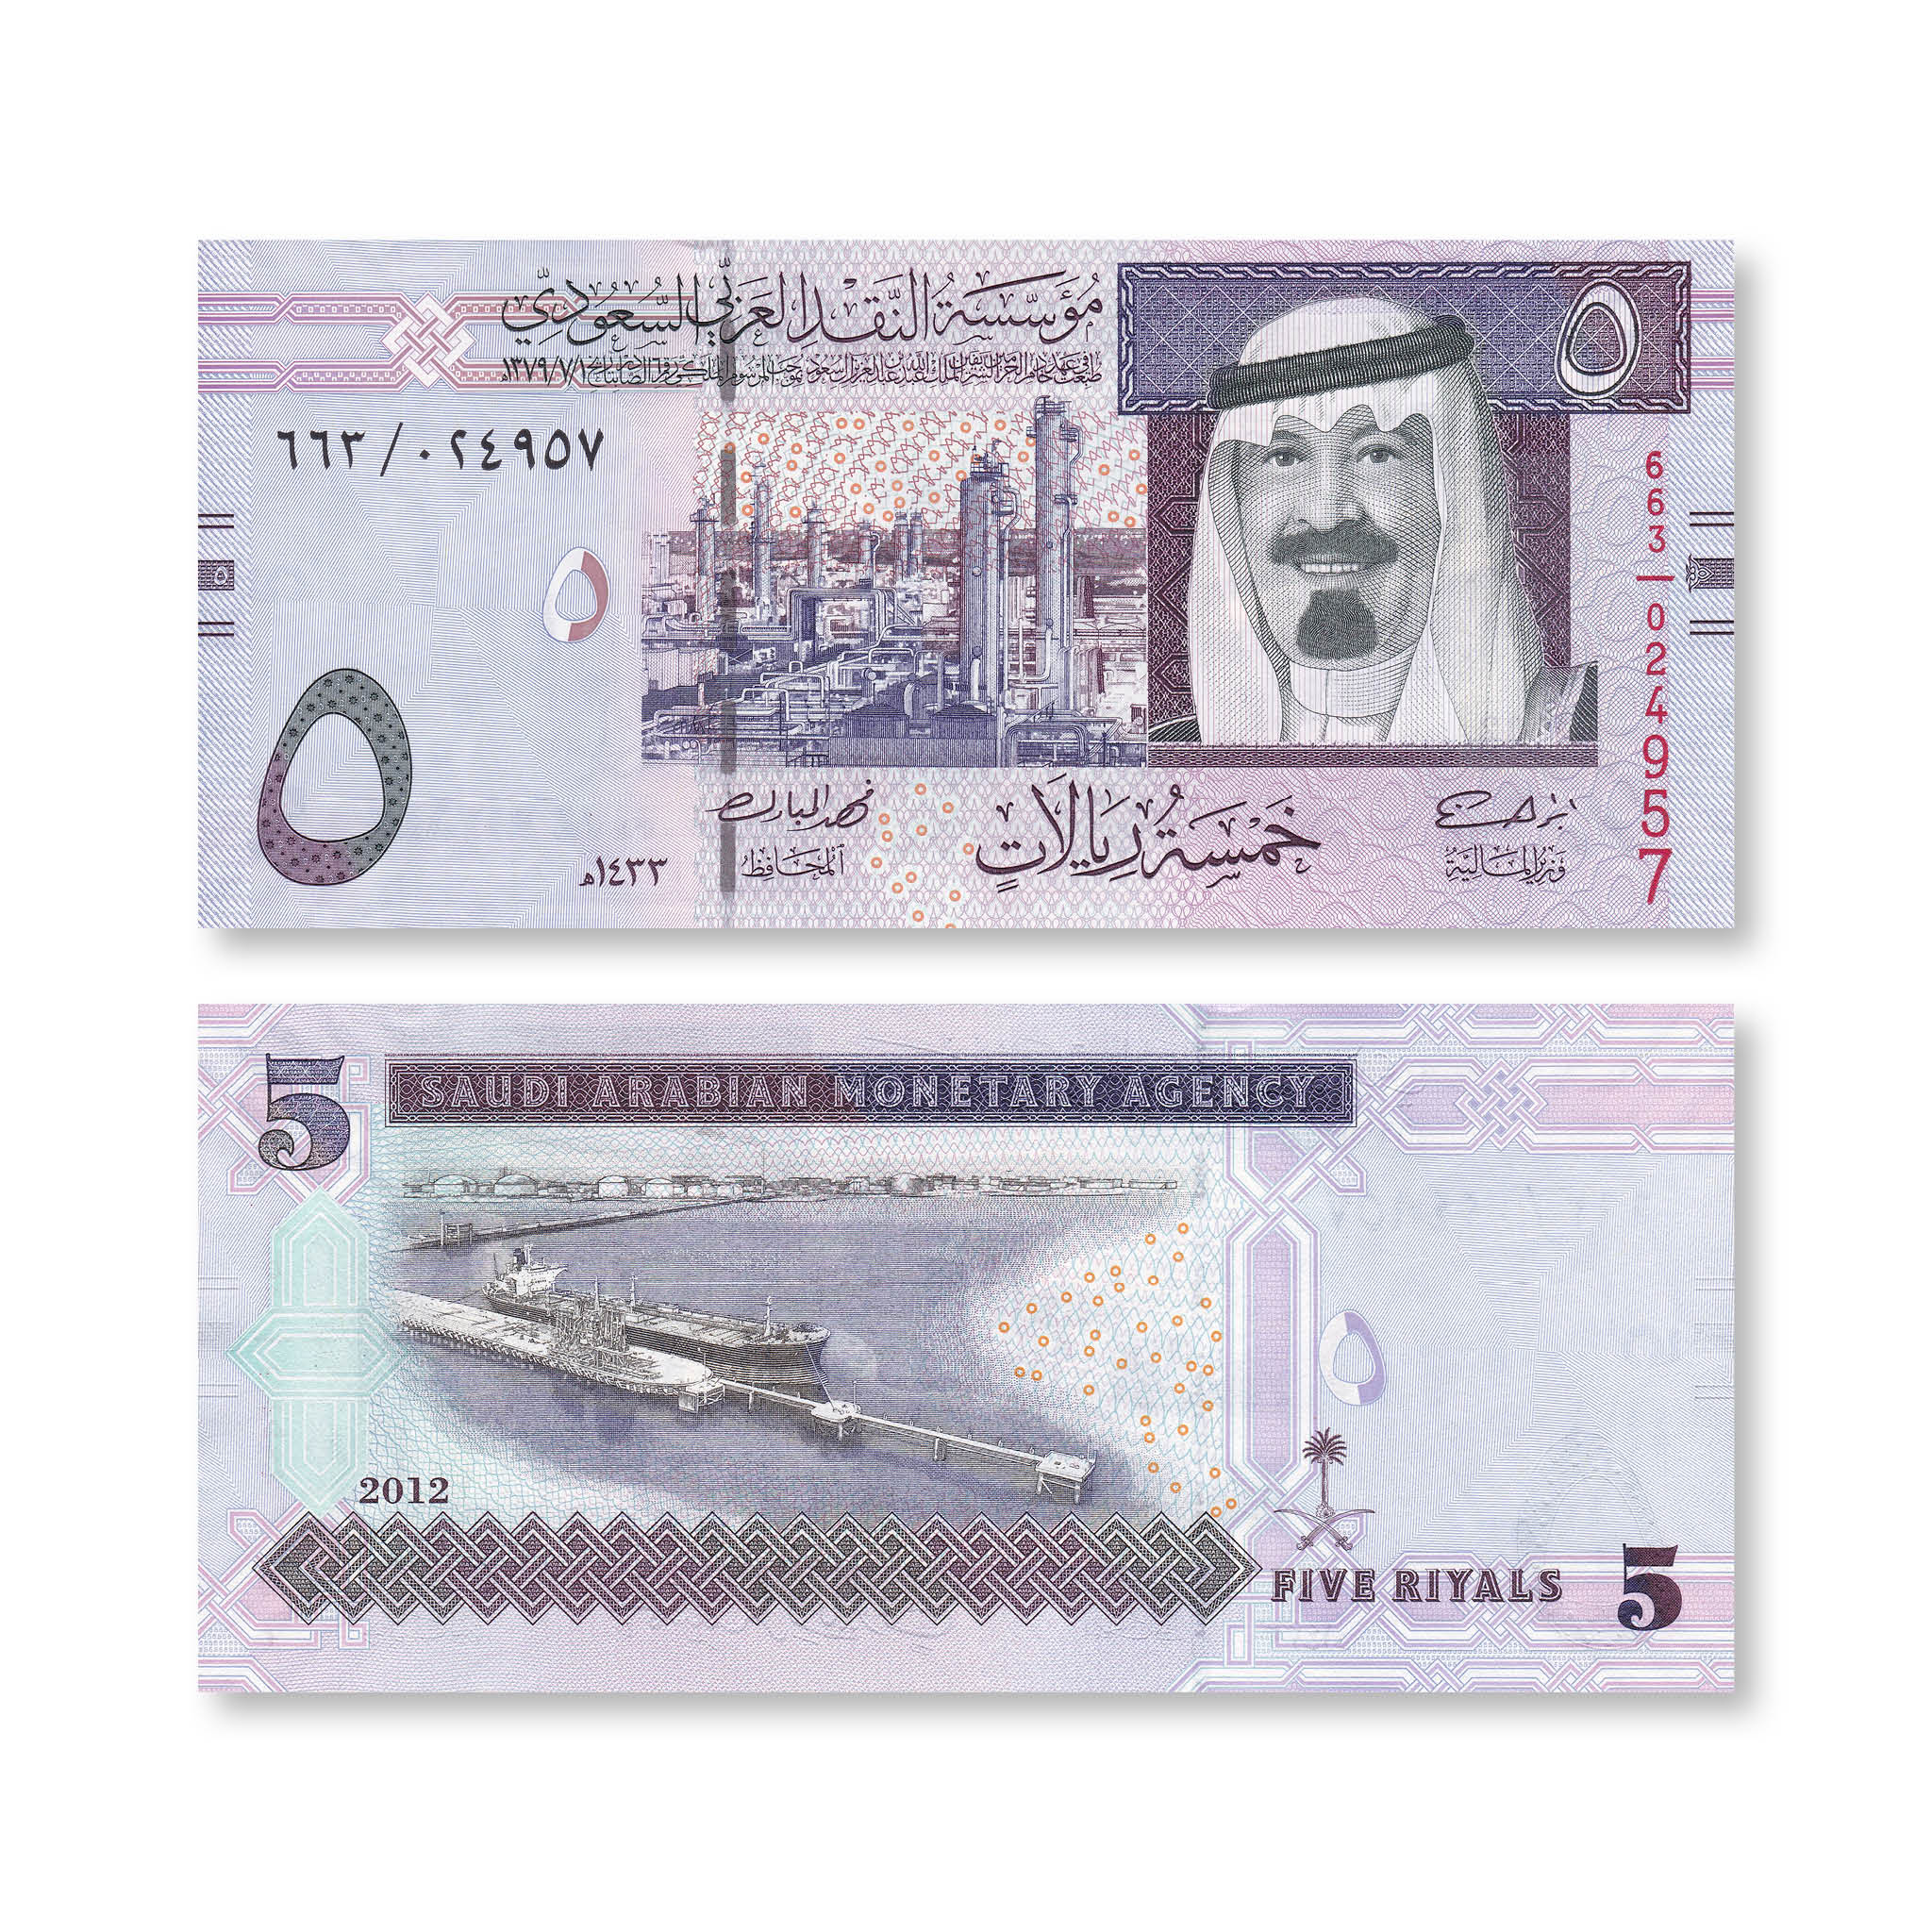 Saudi Arabia 5 Riyals, 2012, B131c, P32c, UNC - Robert's World Money - World Banknotes